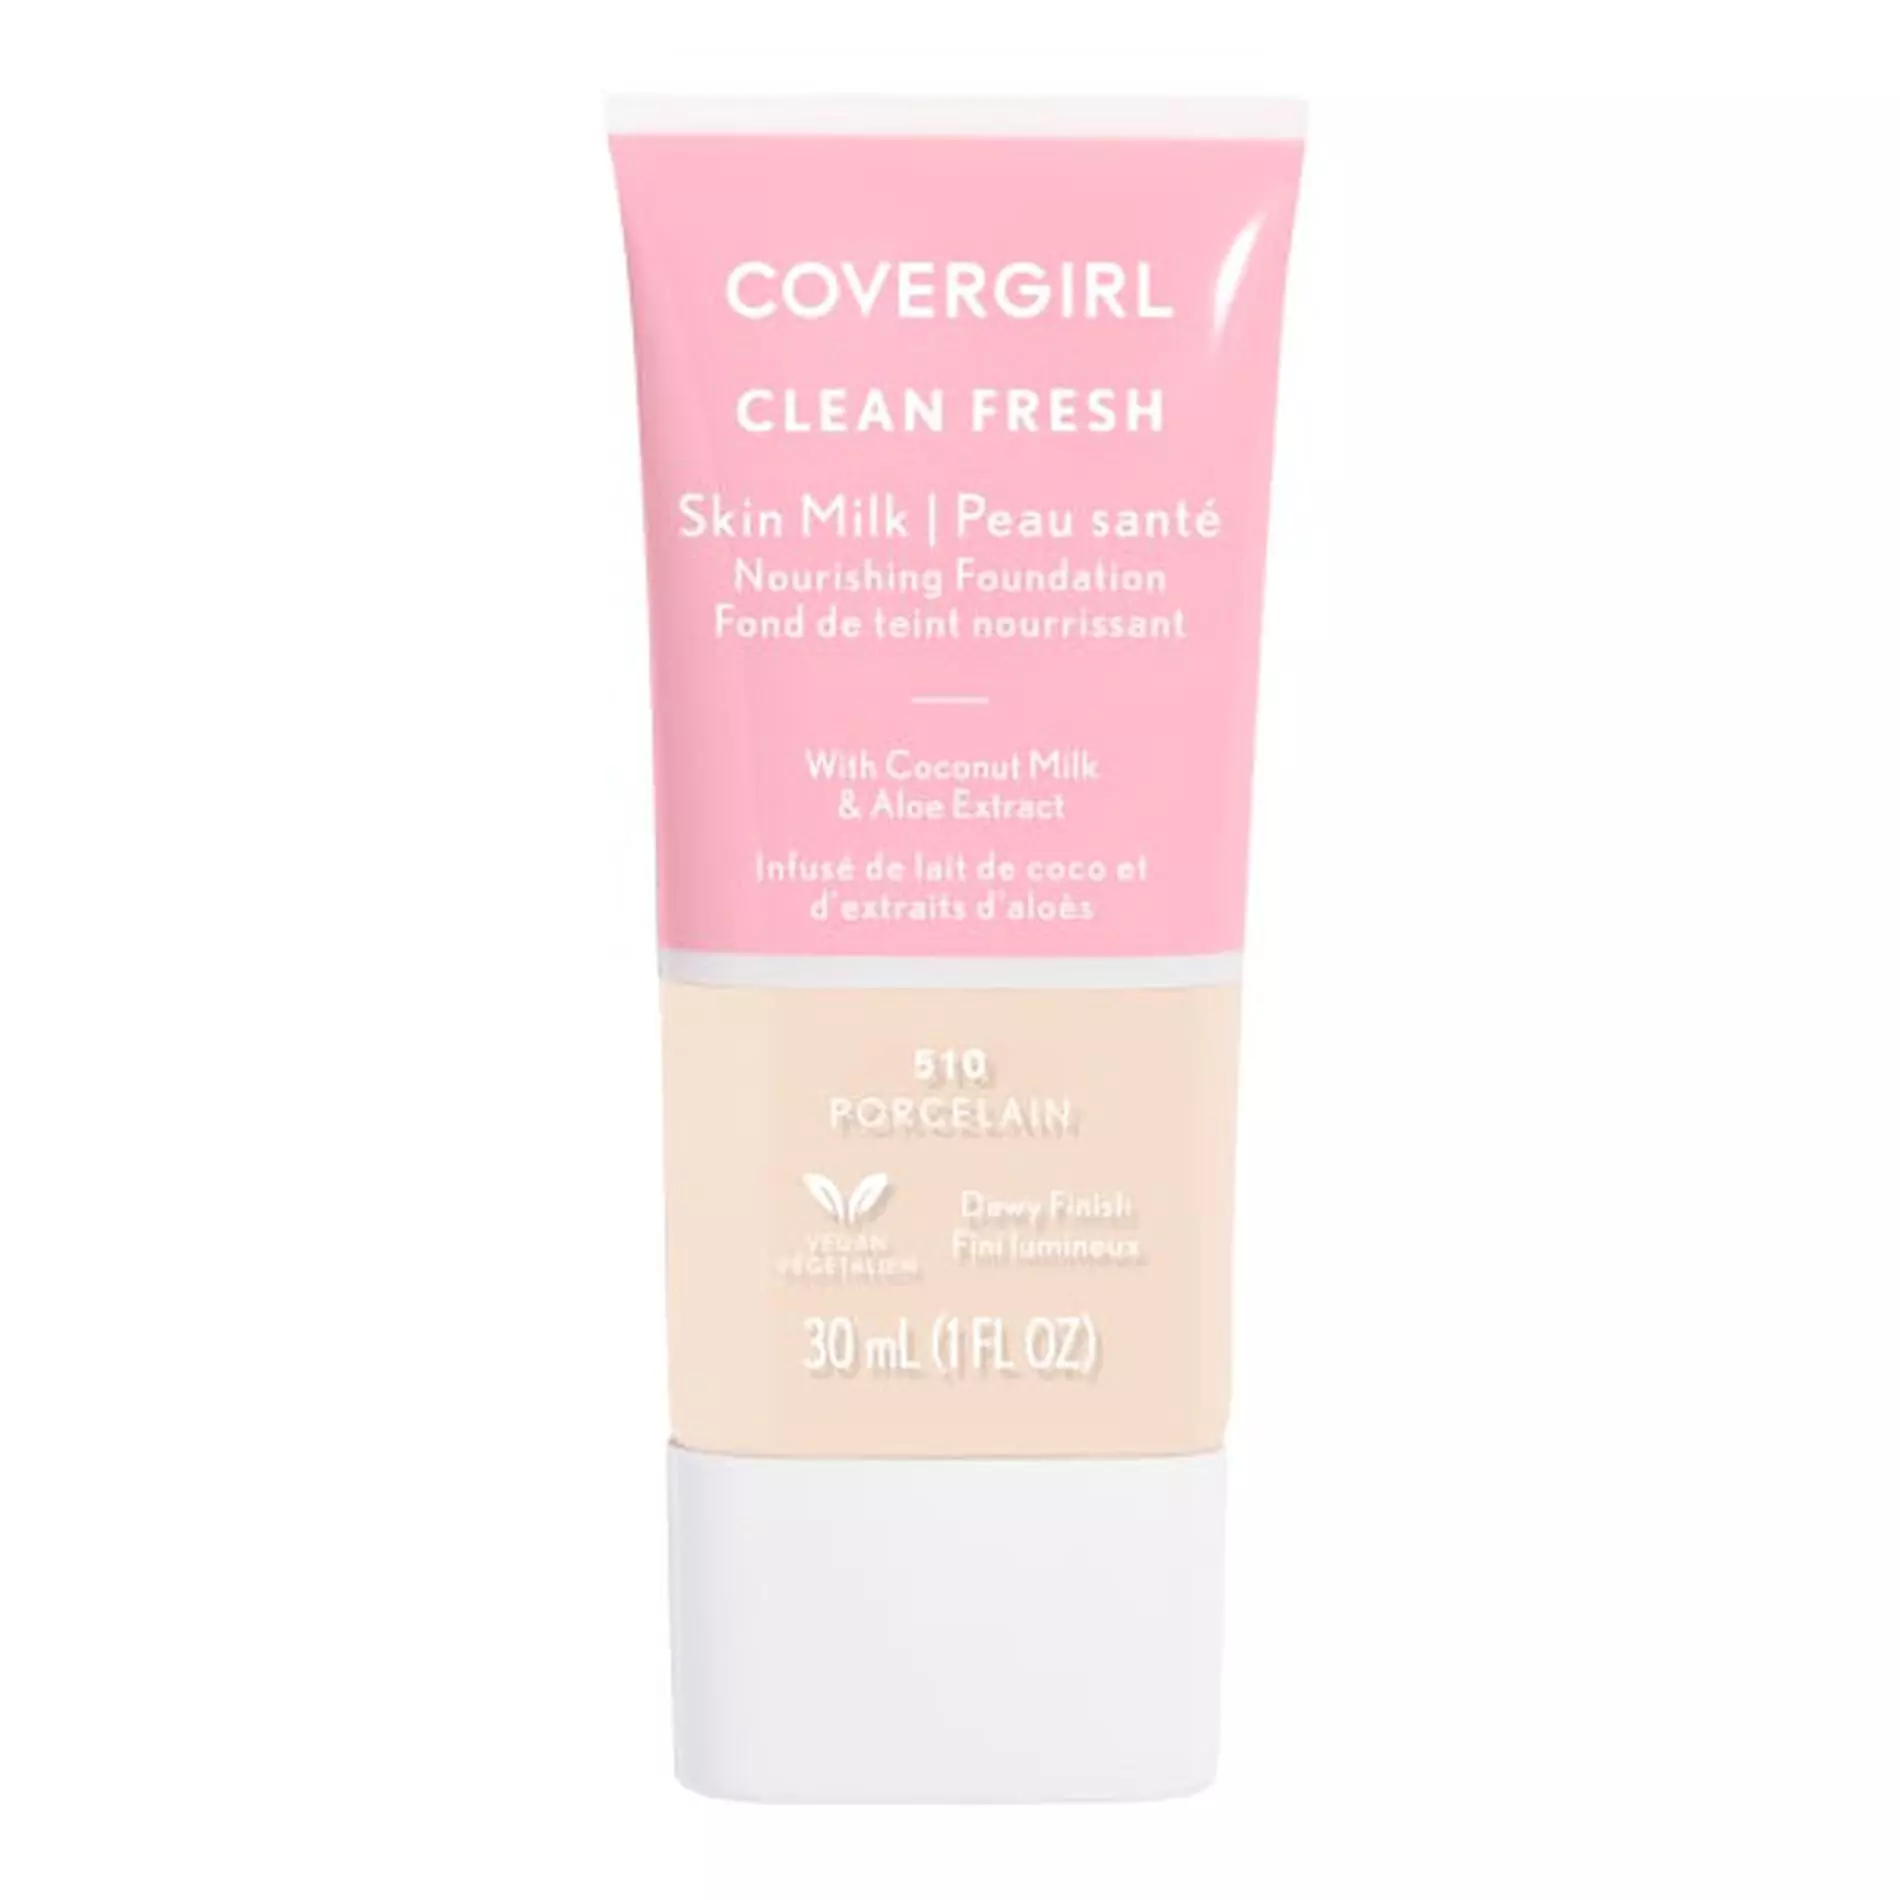 COVERGIRL Clean Fresh Skin Milk Foundation – 530|Fair/Light